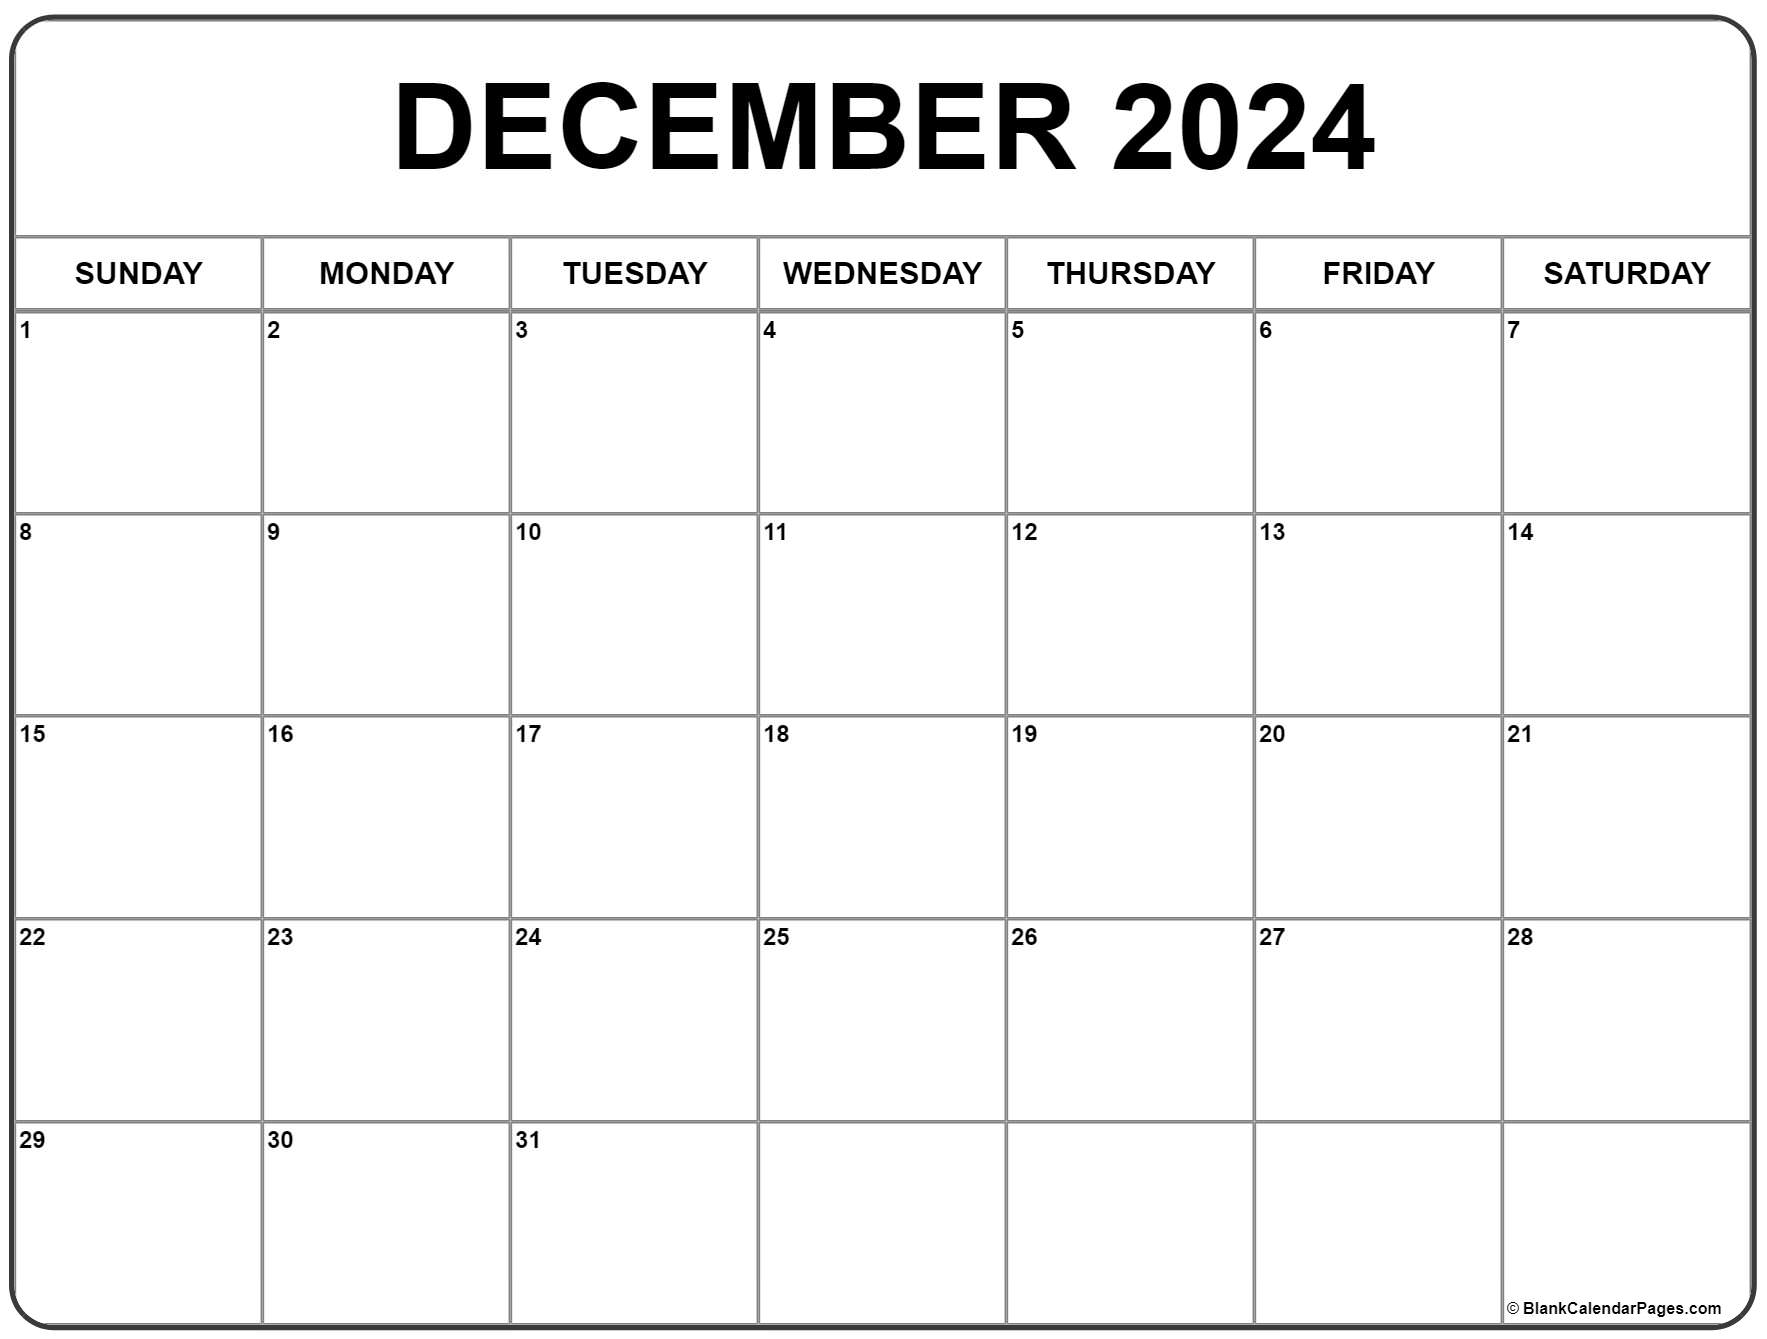 Month Of December 2022 Calendar December 2022 Calendar | Free Printable Calendar Templates